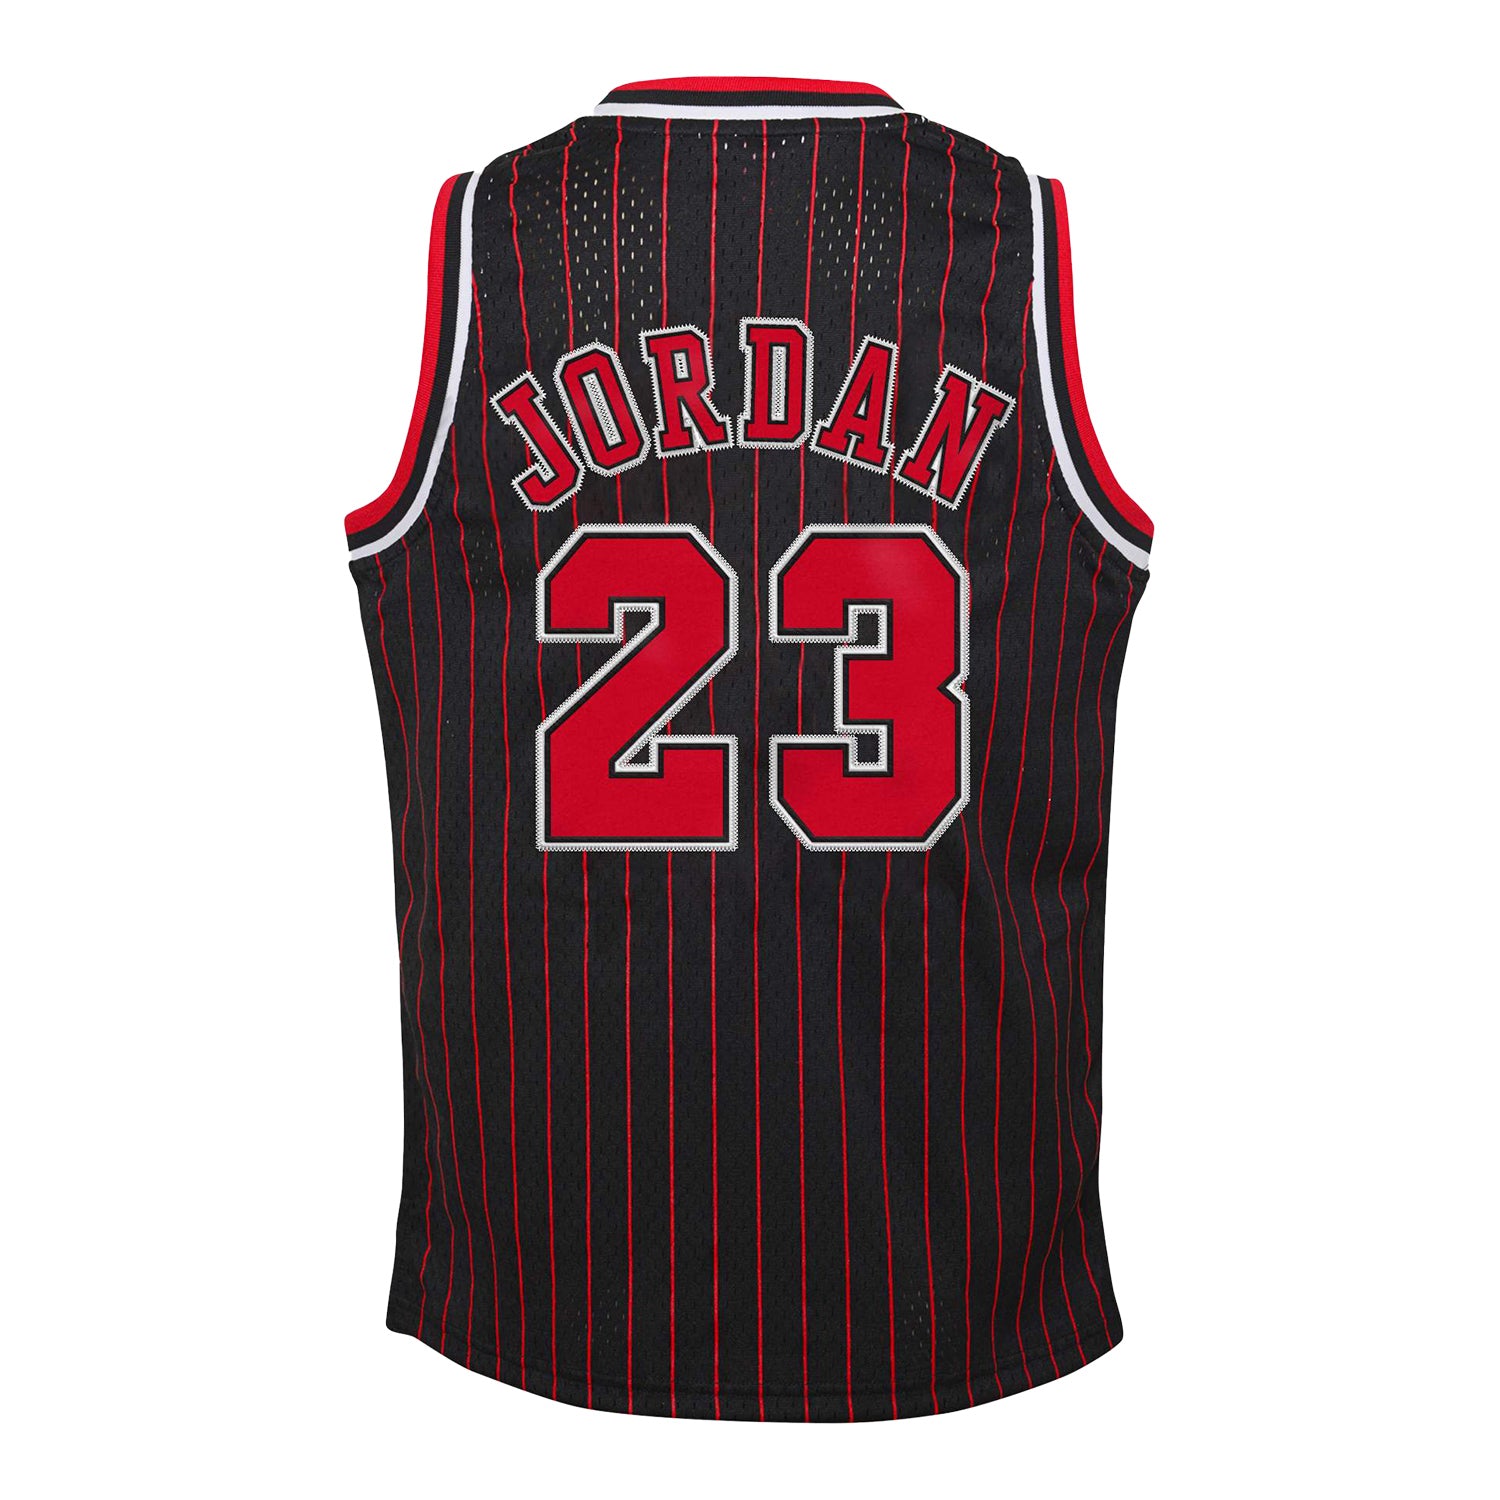  Michael Jordan Jersey